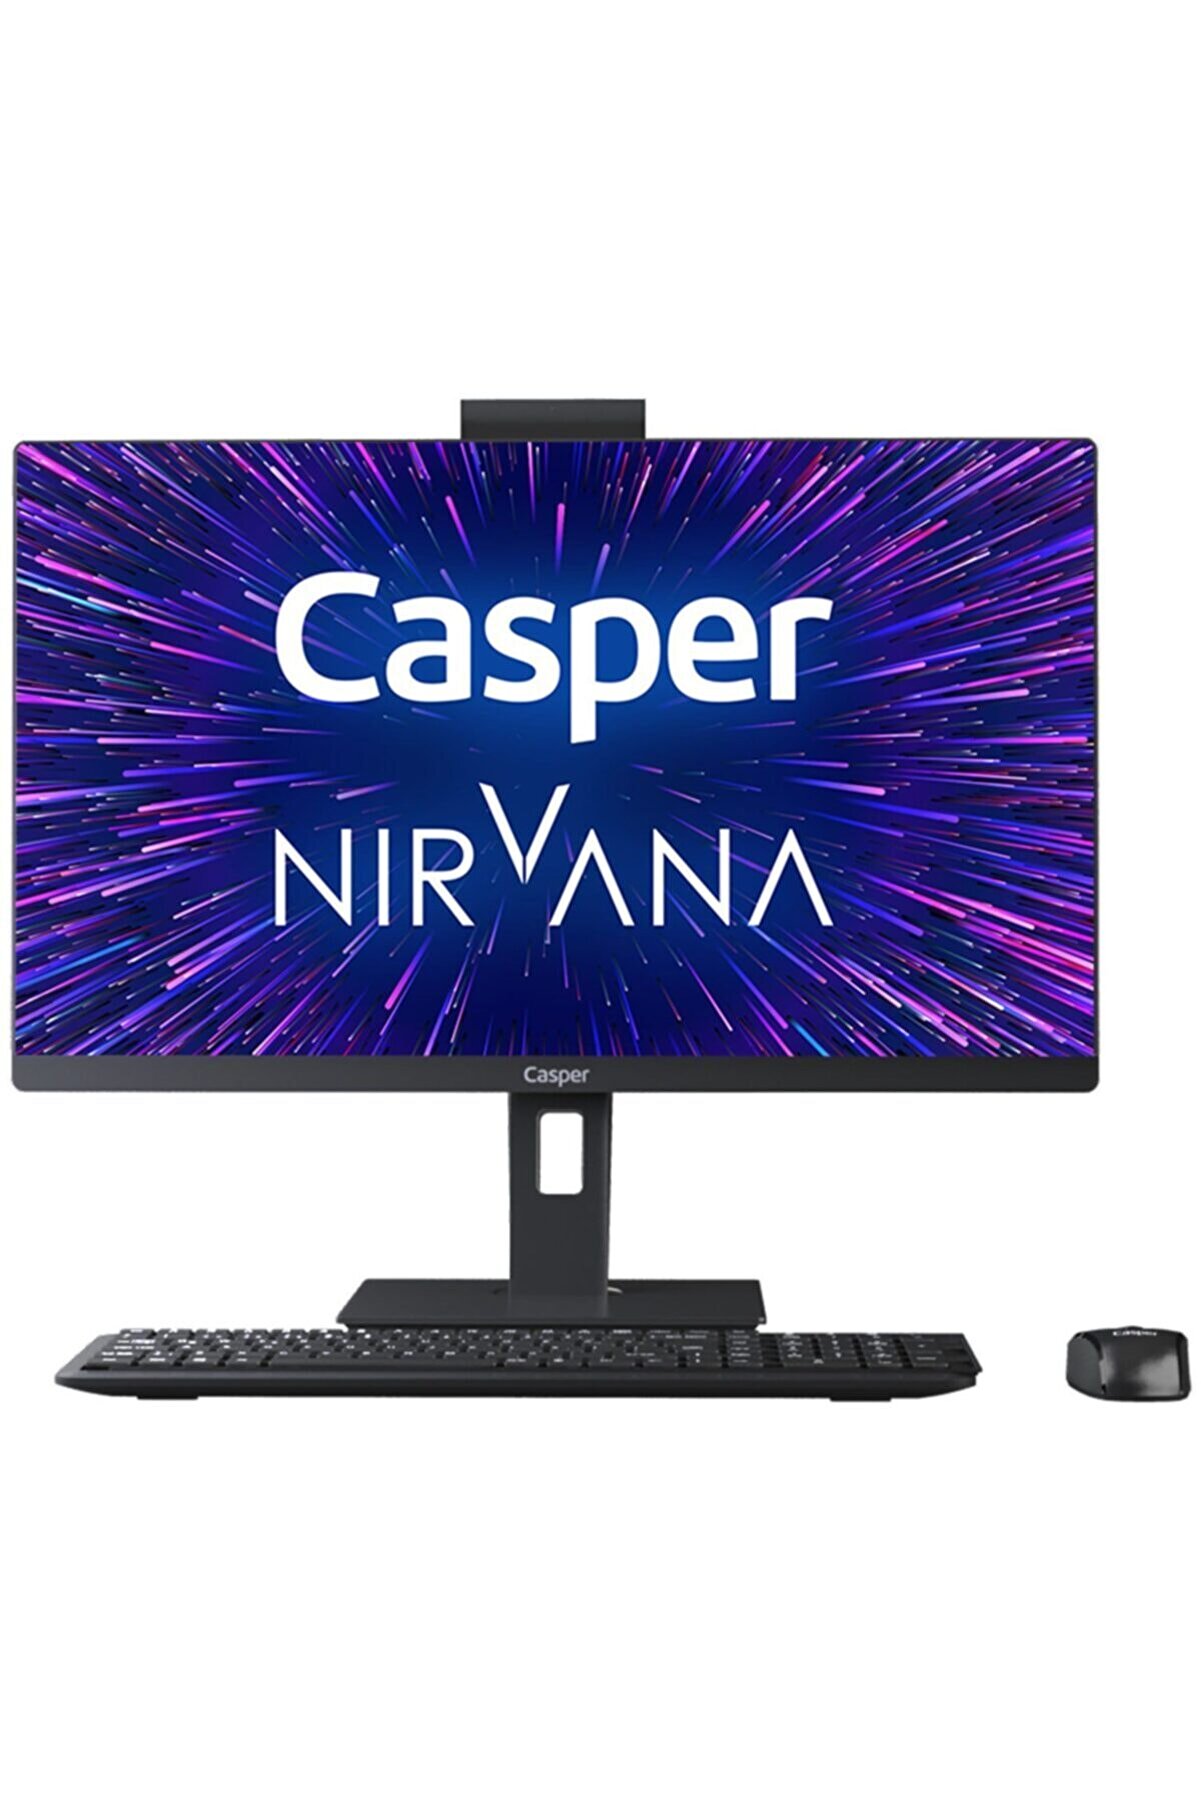 Casper Nirvana A5h.8100-4d00t-v Intel Core I3 8100 4gb 240gb Ssd Windows 10 Home 23.8" Fhd